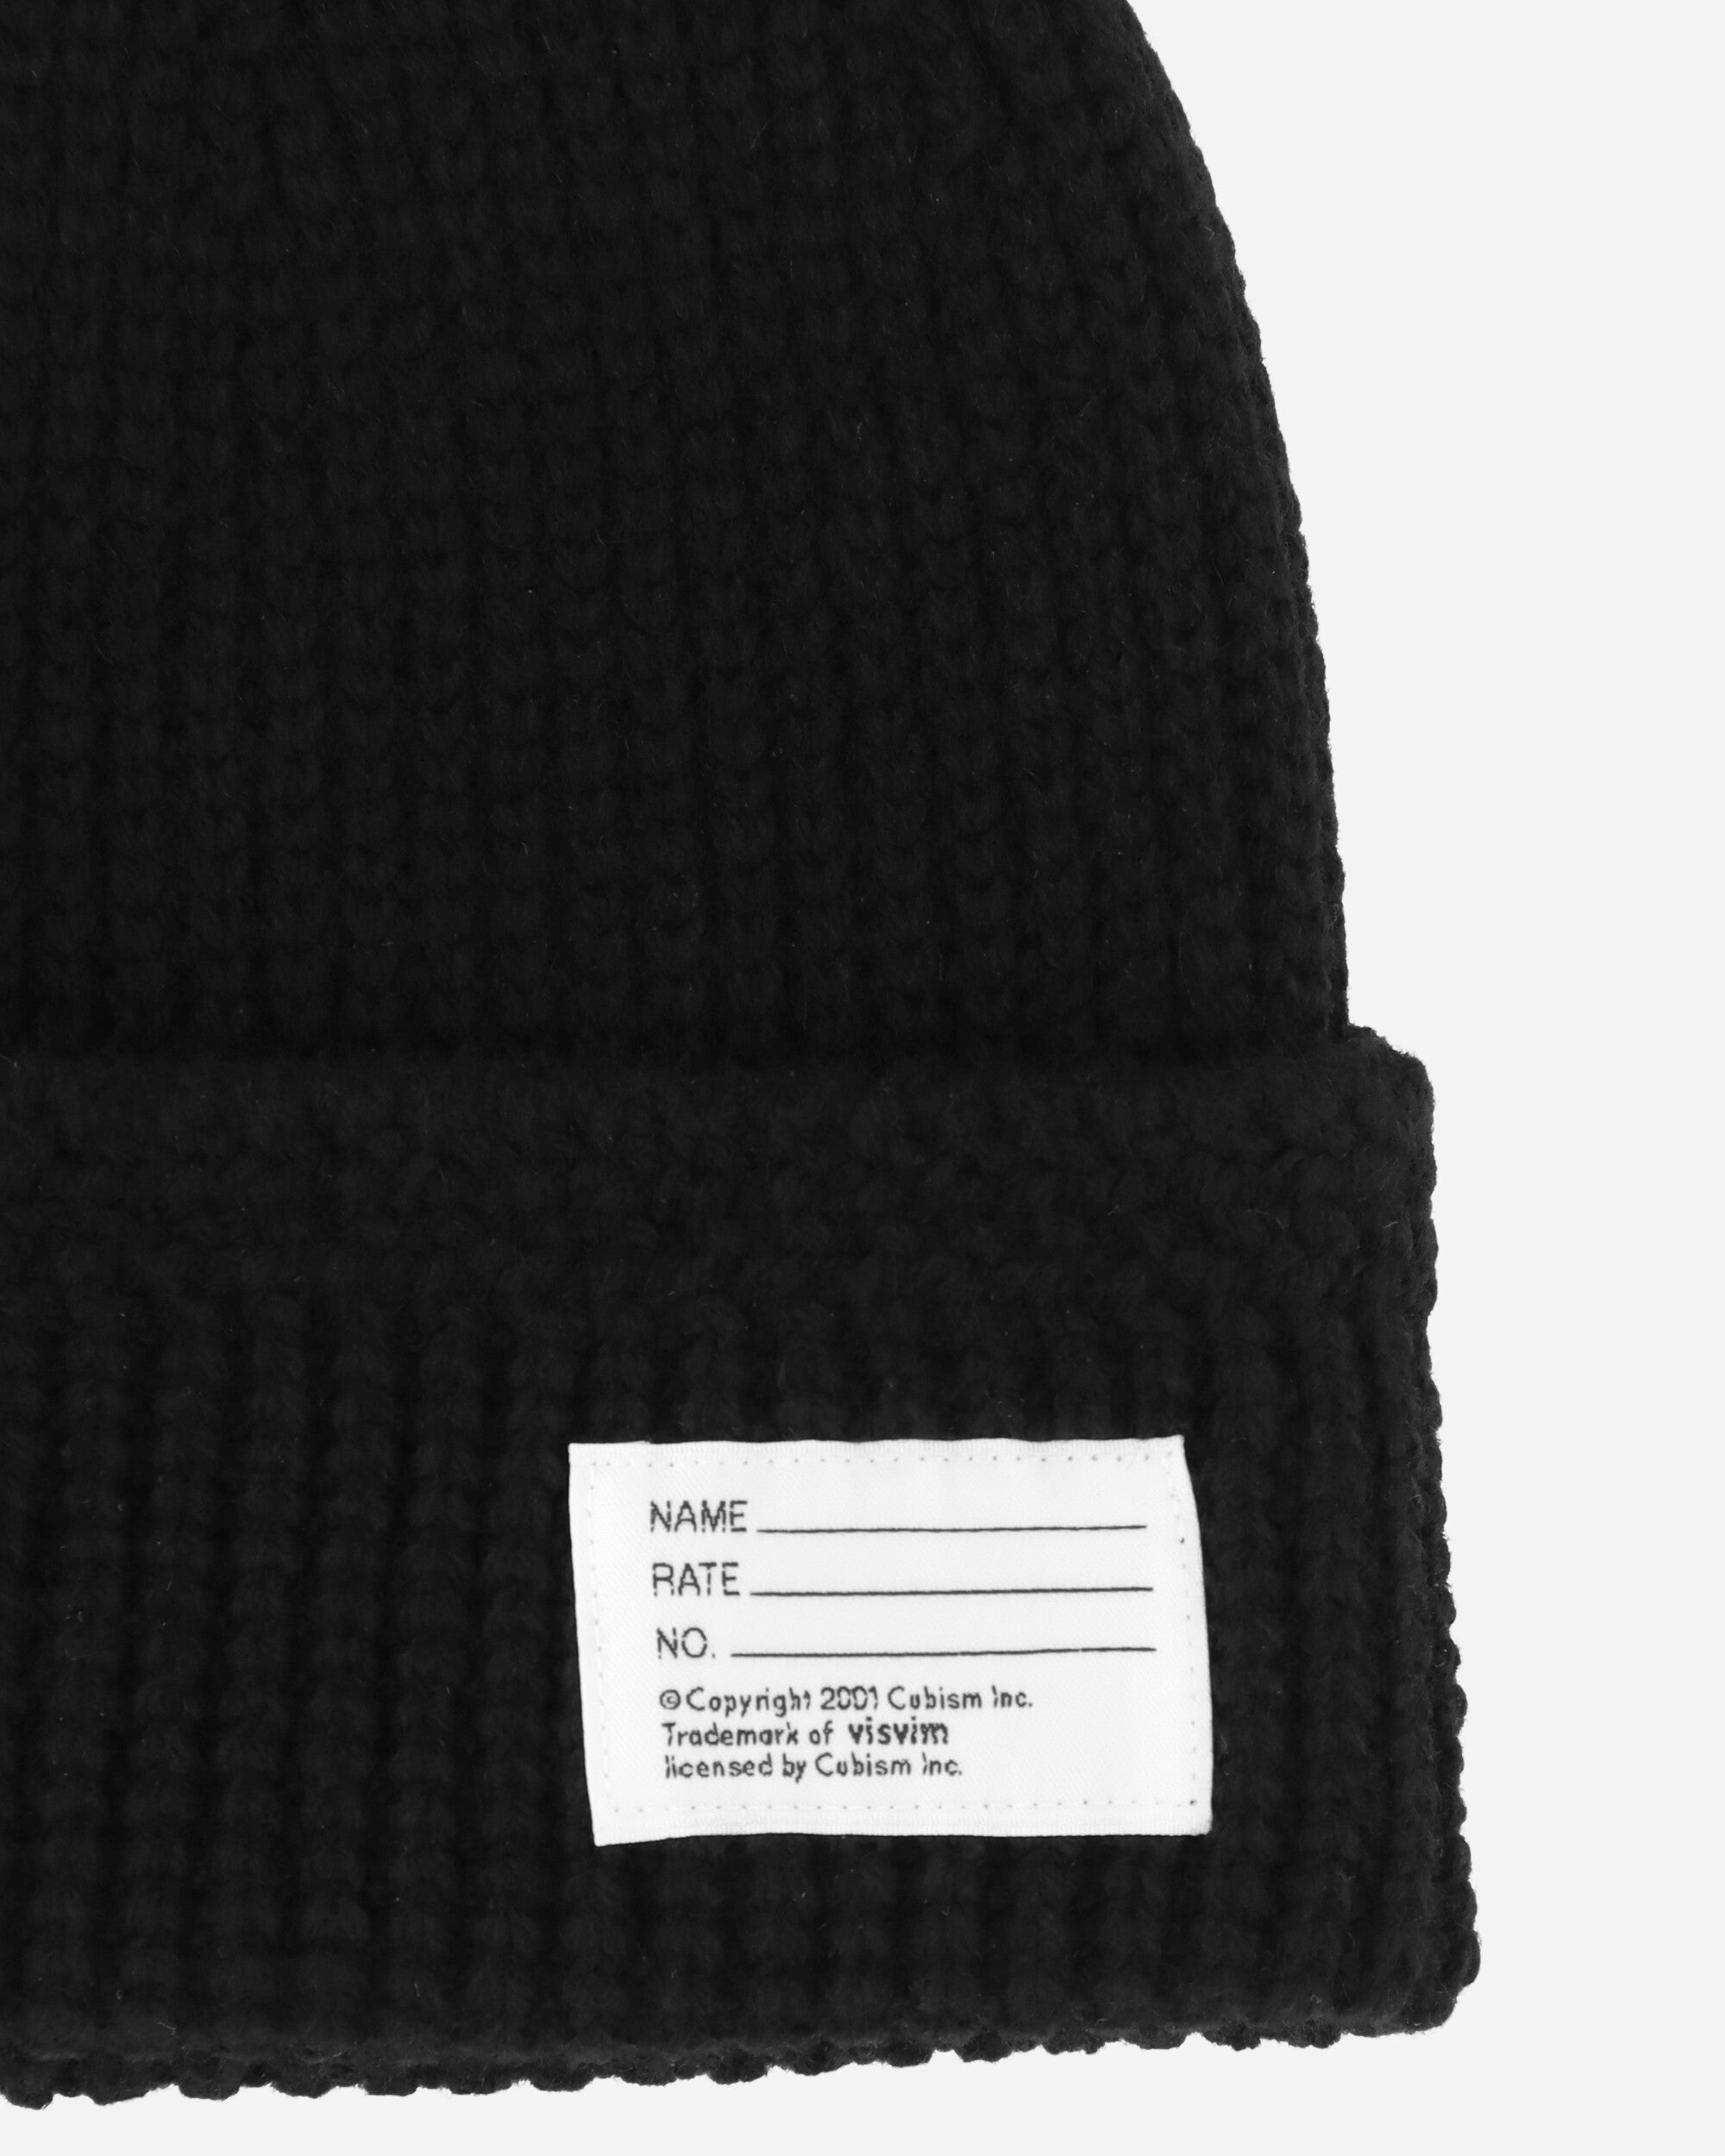 visvim Knit Beanie (W/Ws) Black Hats Beanies 0123203003013 1